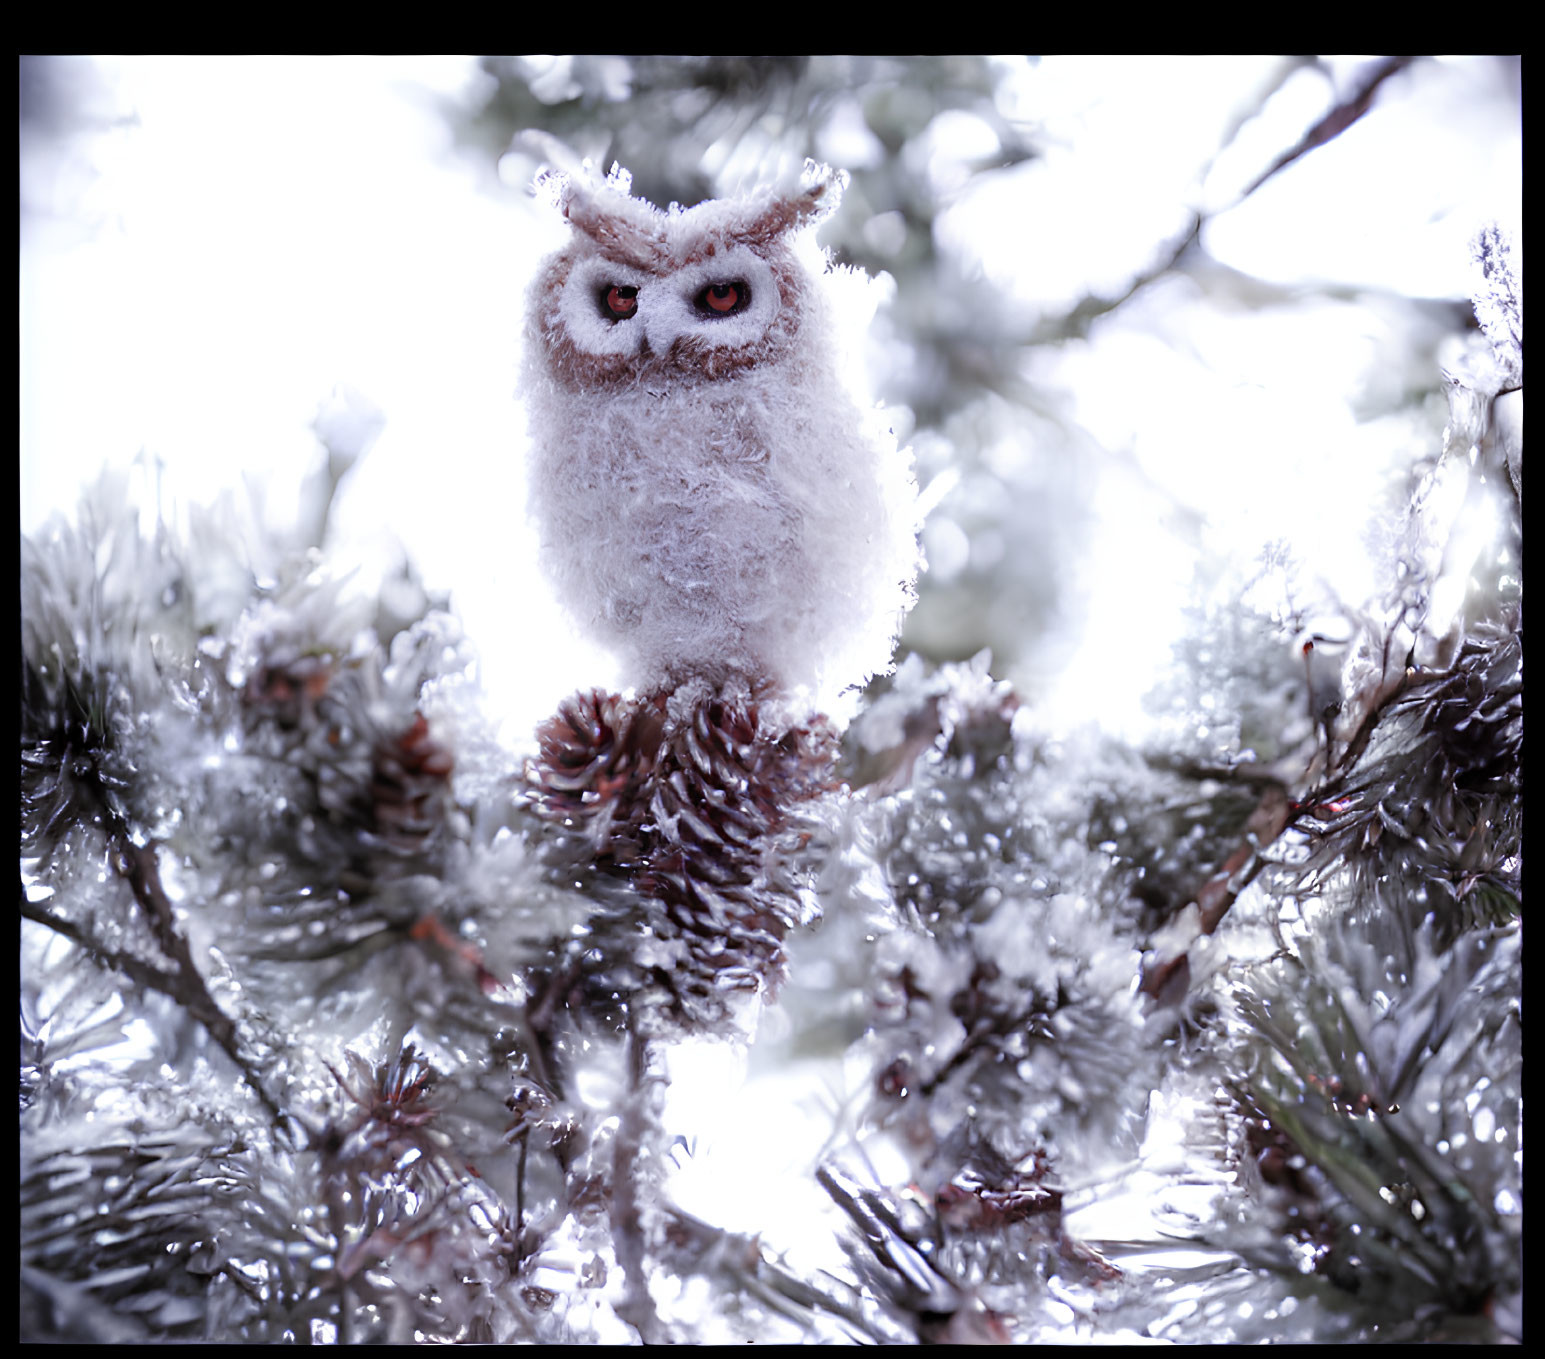 Plush Toy Owl on Pine Branch in Snowy Scene